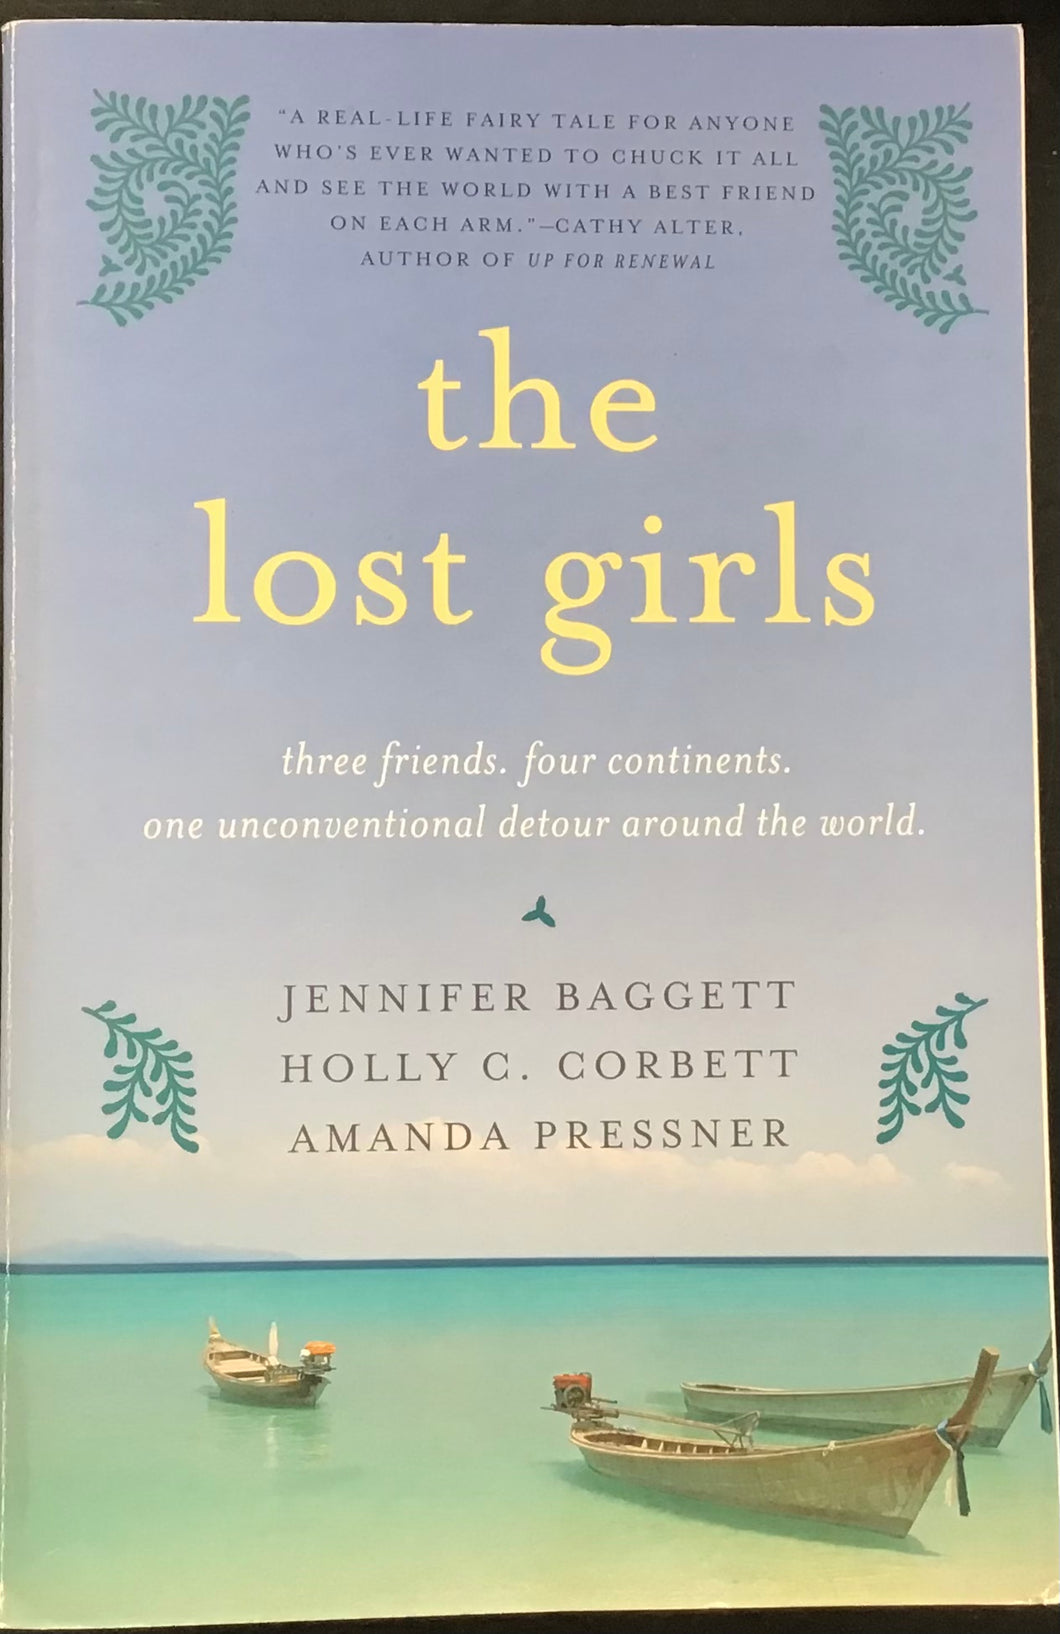 The Lost Girls by Jennifer Baggett, Holly C. Corbett, Amanda Pressner